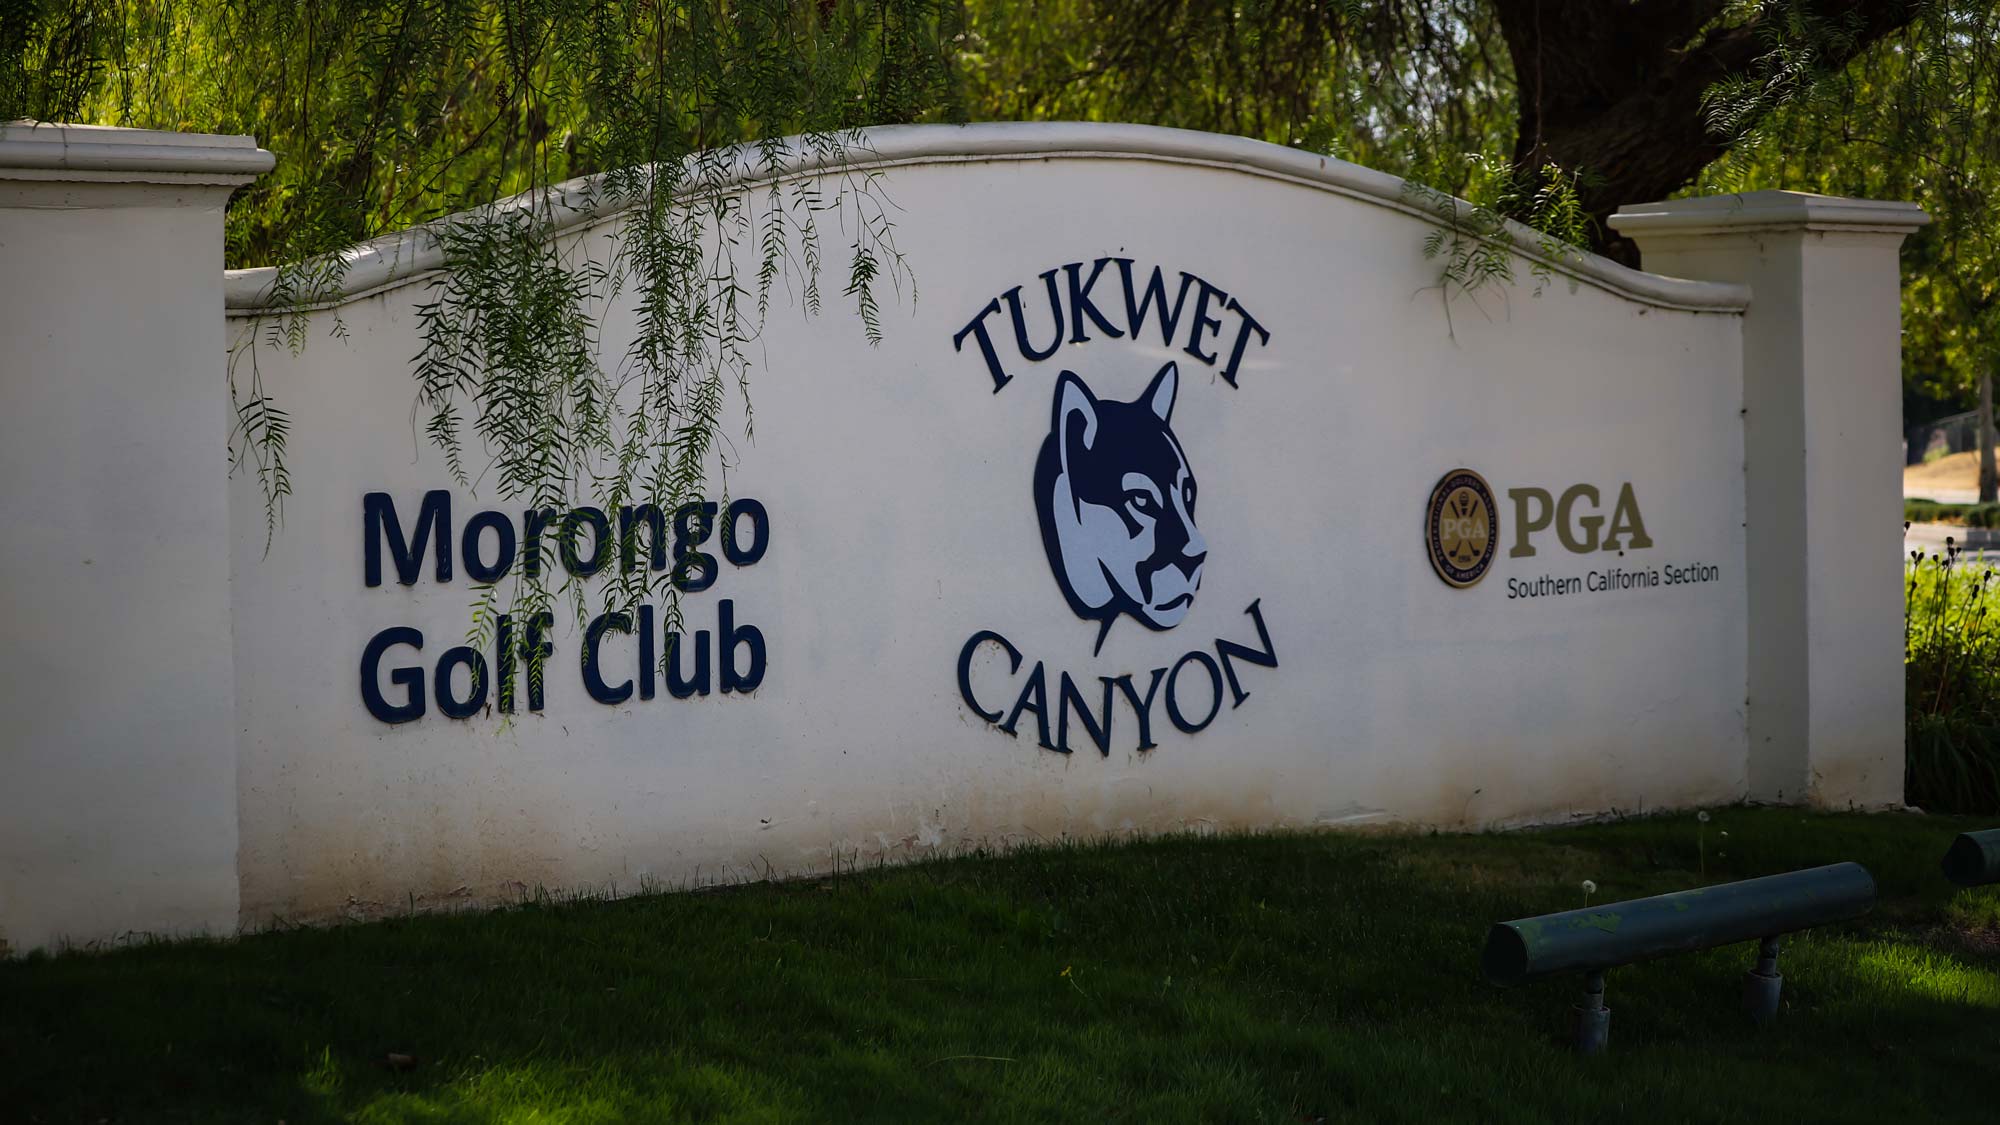 Morongo Golf Club at Tukwet Canyon IOA Champ 2